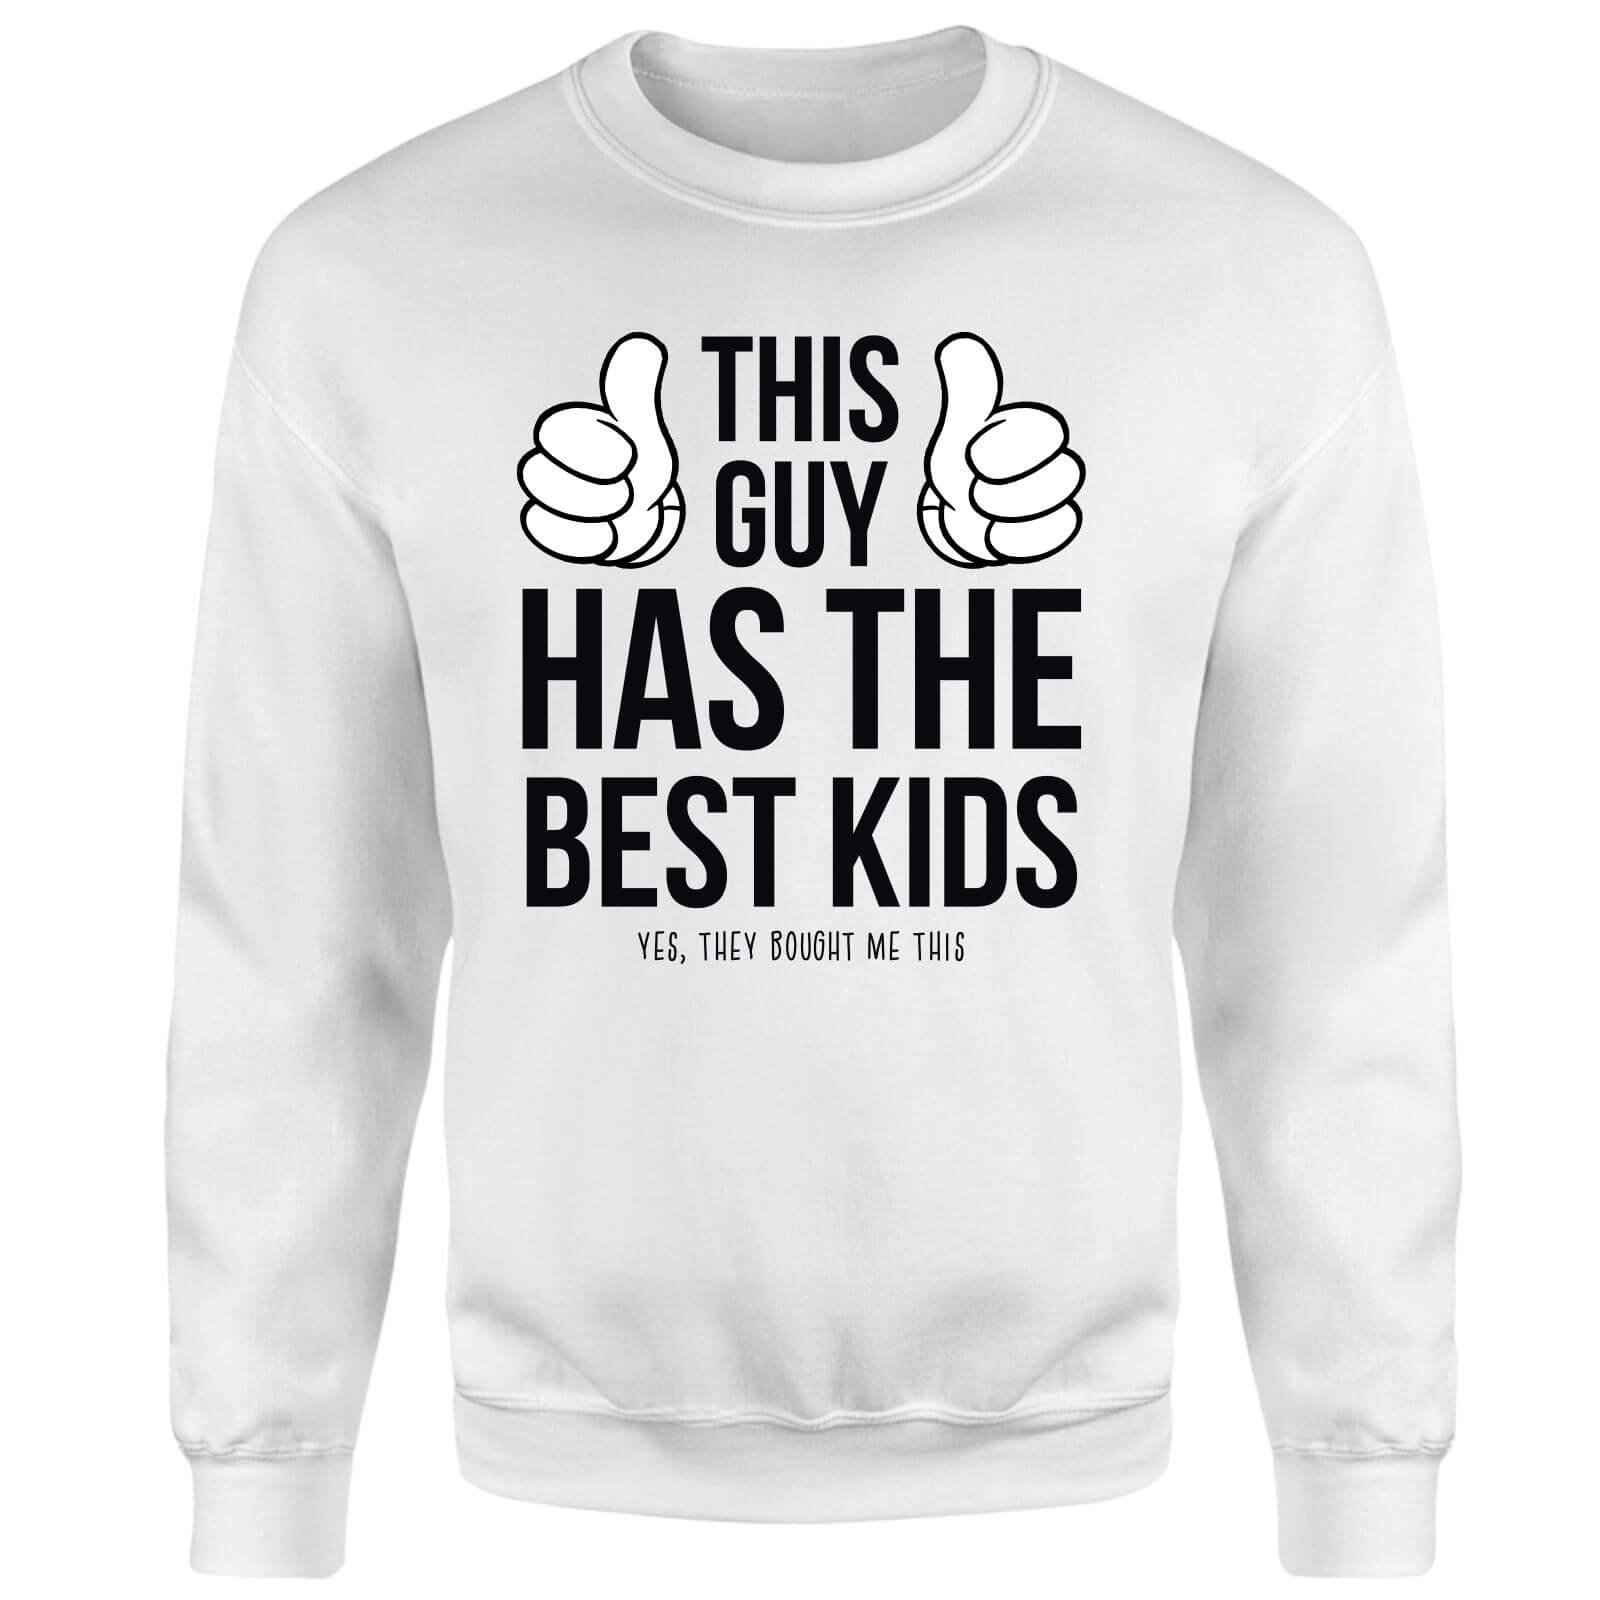 This Guy Has The Best Kids Sweatshirt - White - L